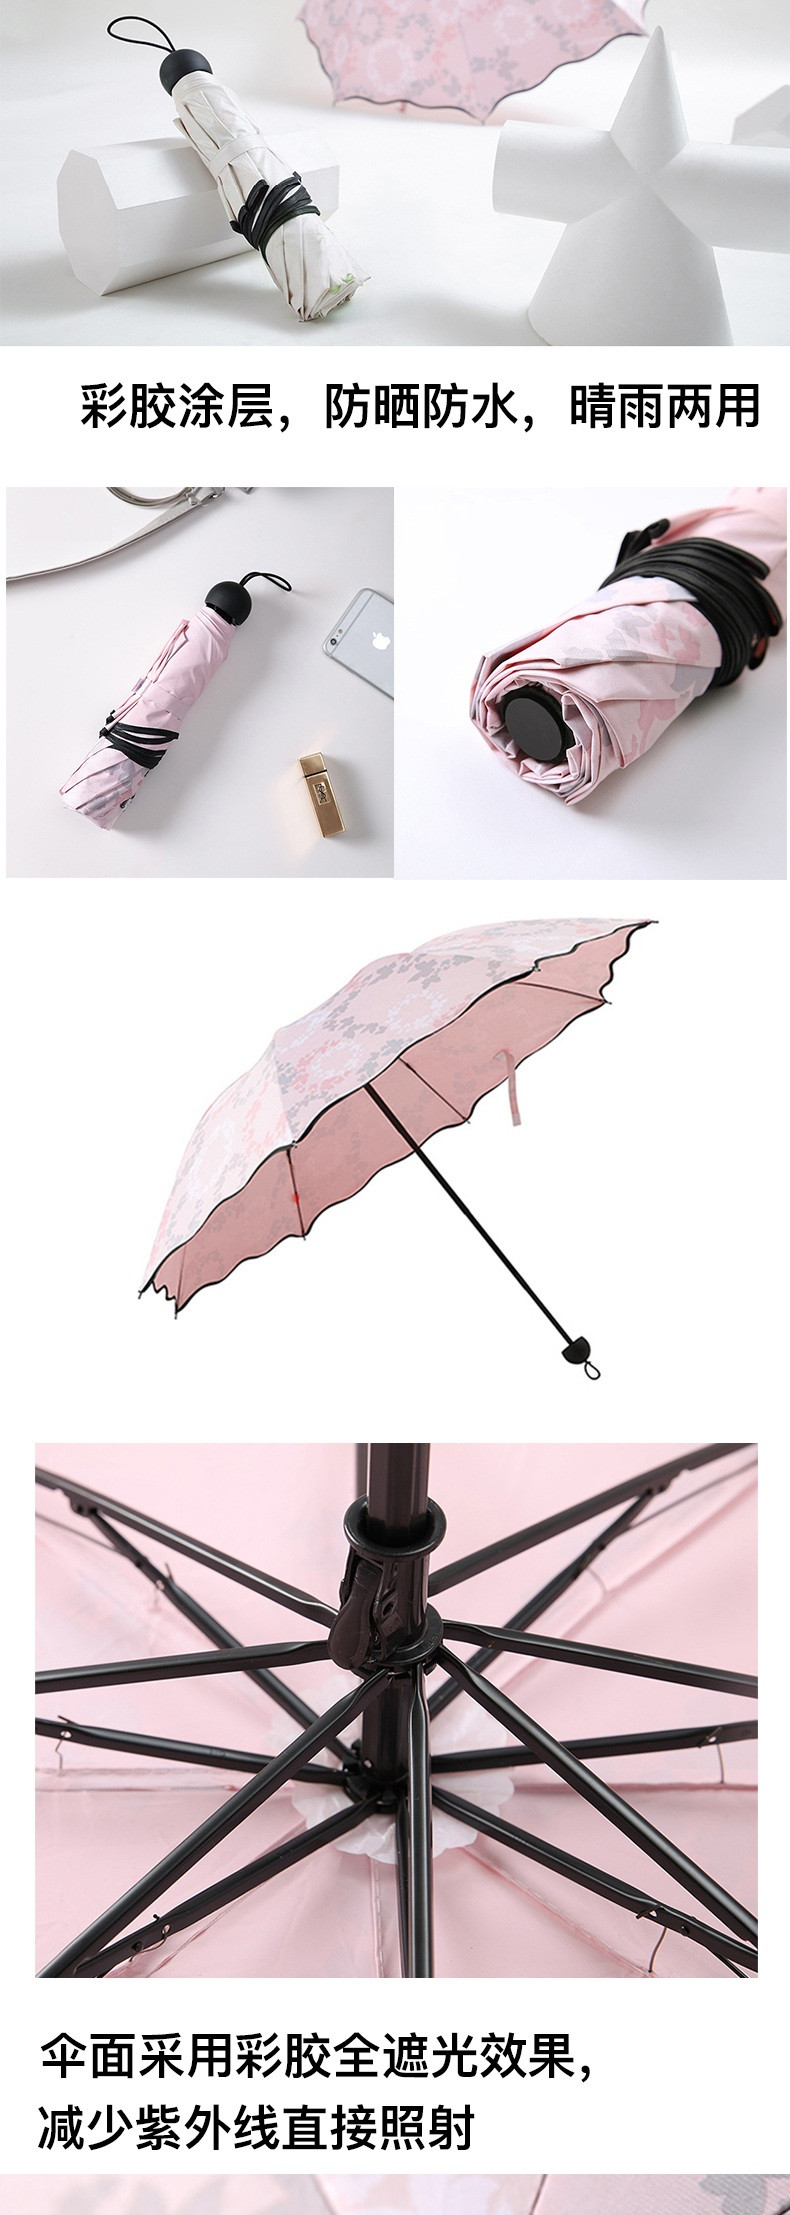 ABS爱彼此 便携式彩胶防晒伞折叠伞遮阳伞晴雨伞-玫瑰款/蝴蝶款